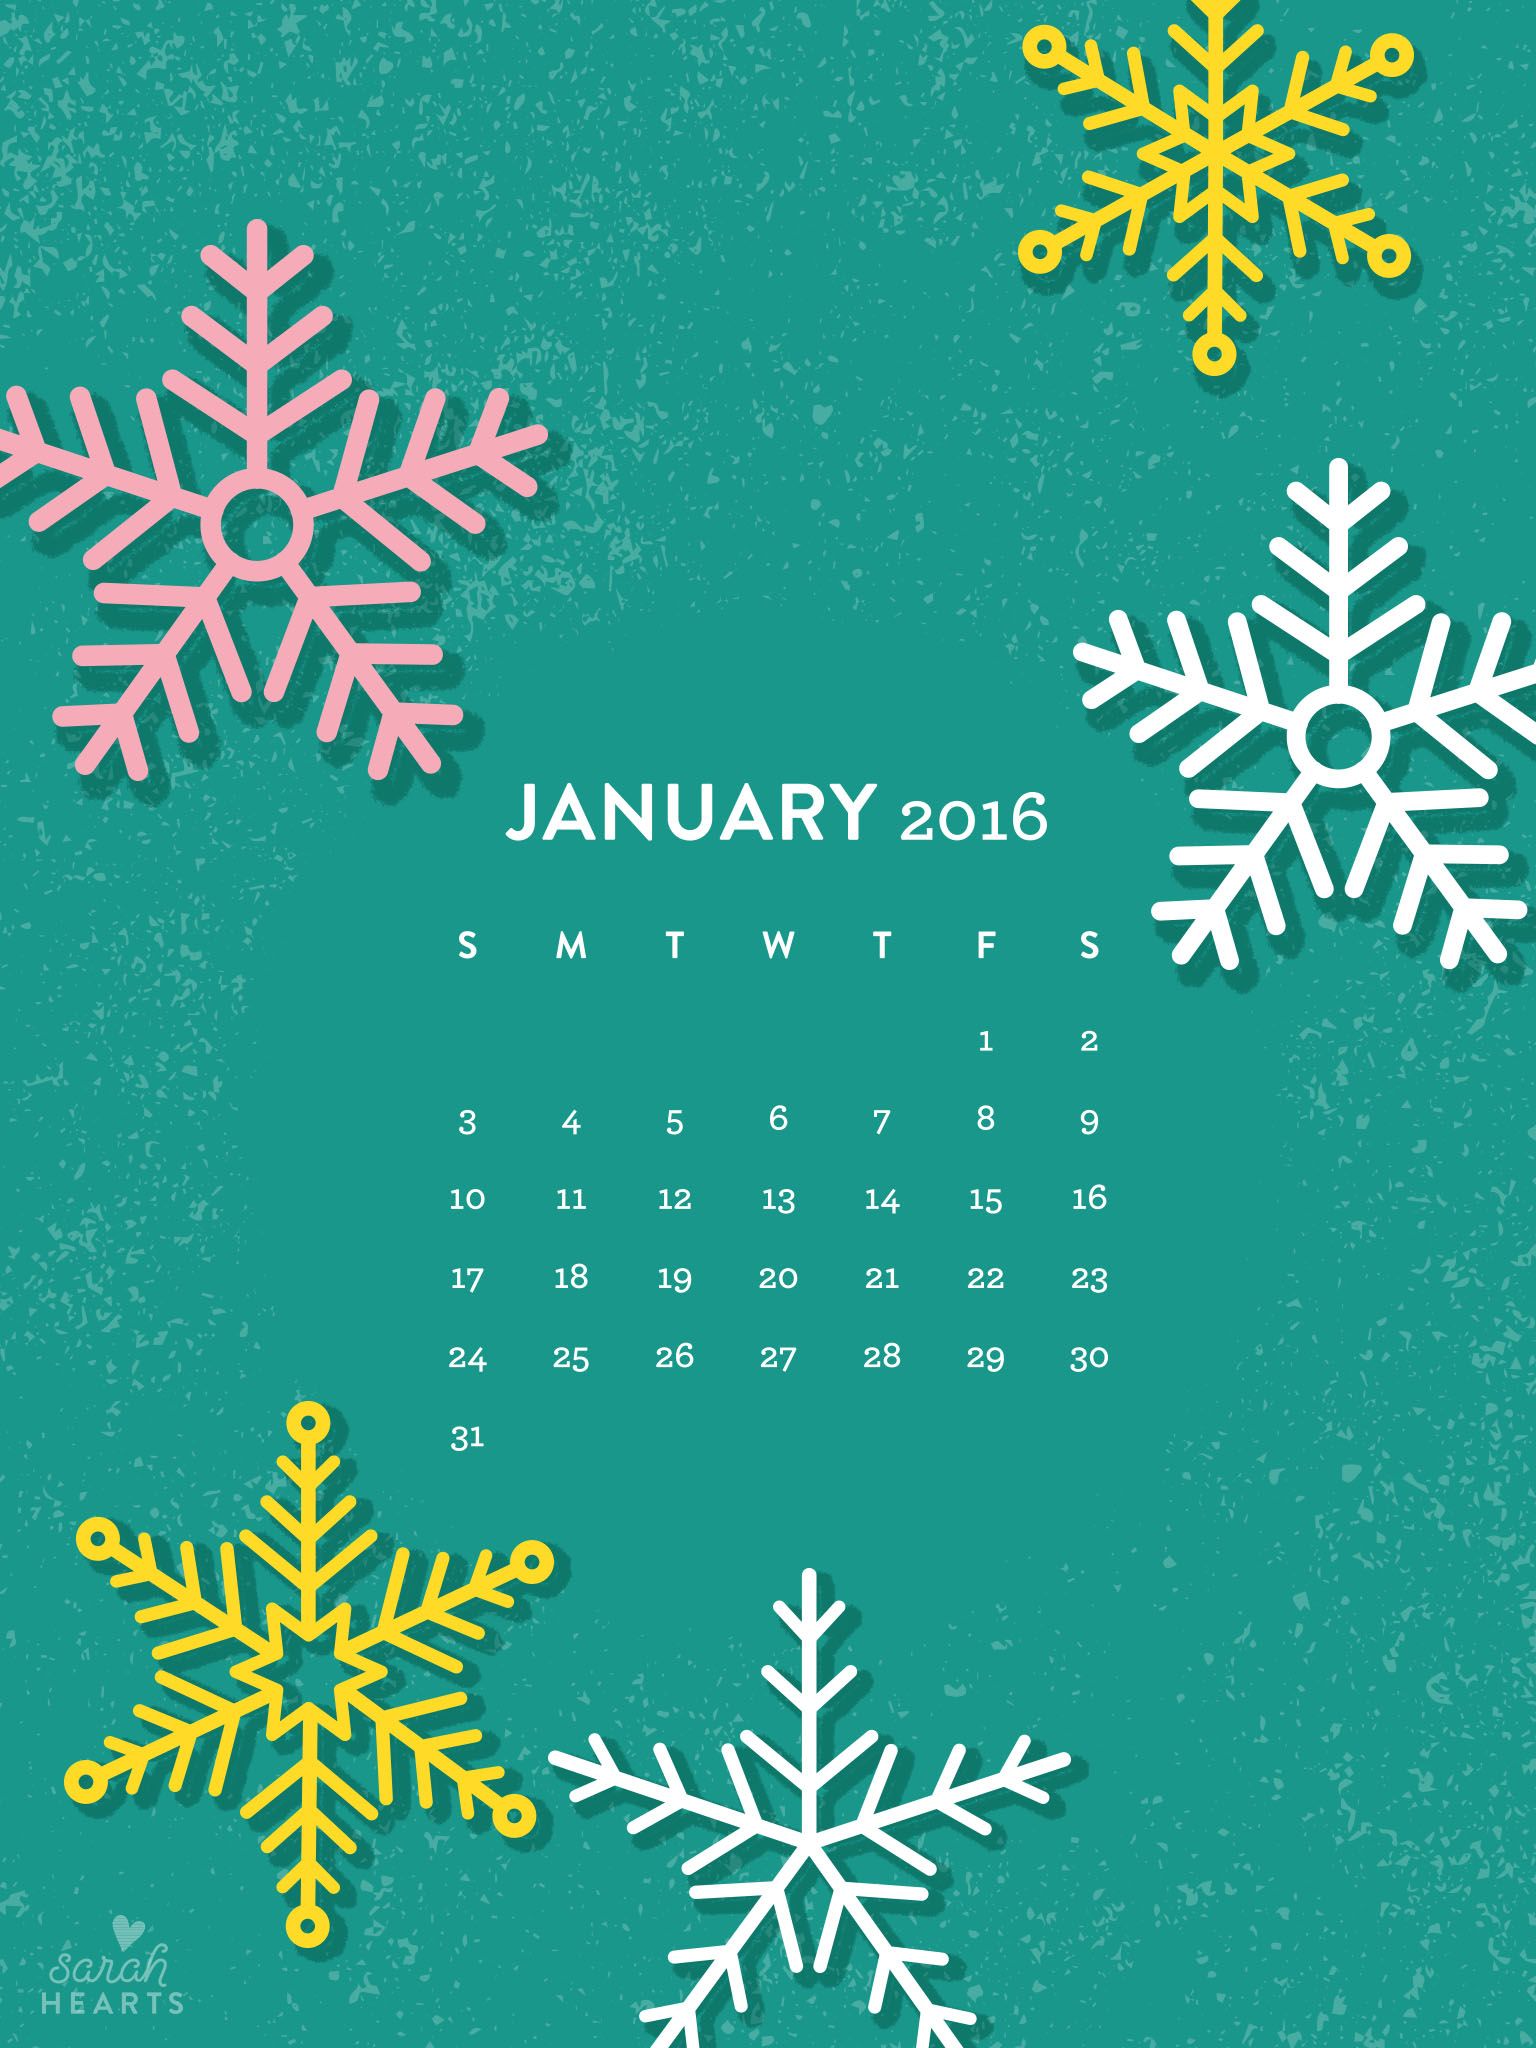 January 2016 Calendar Wallpaper - Sarah Hearts